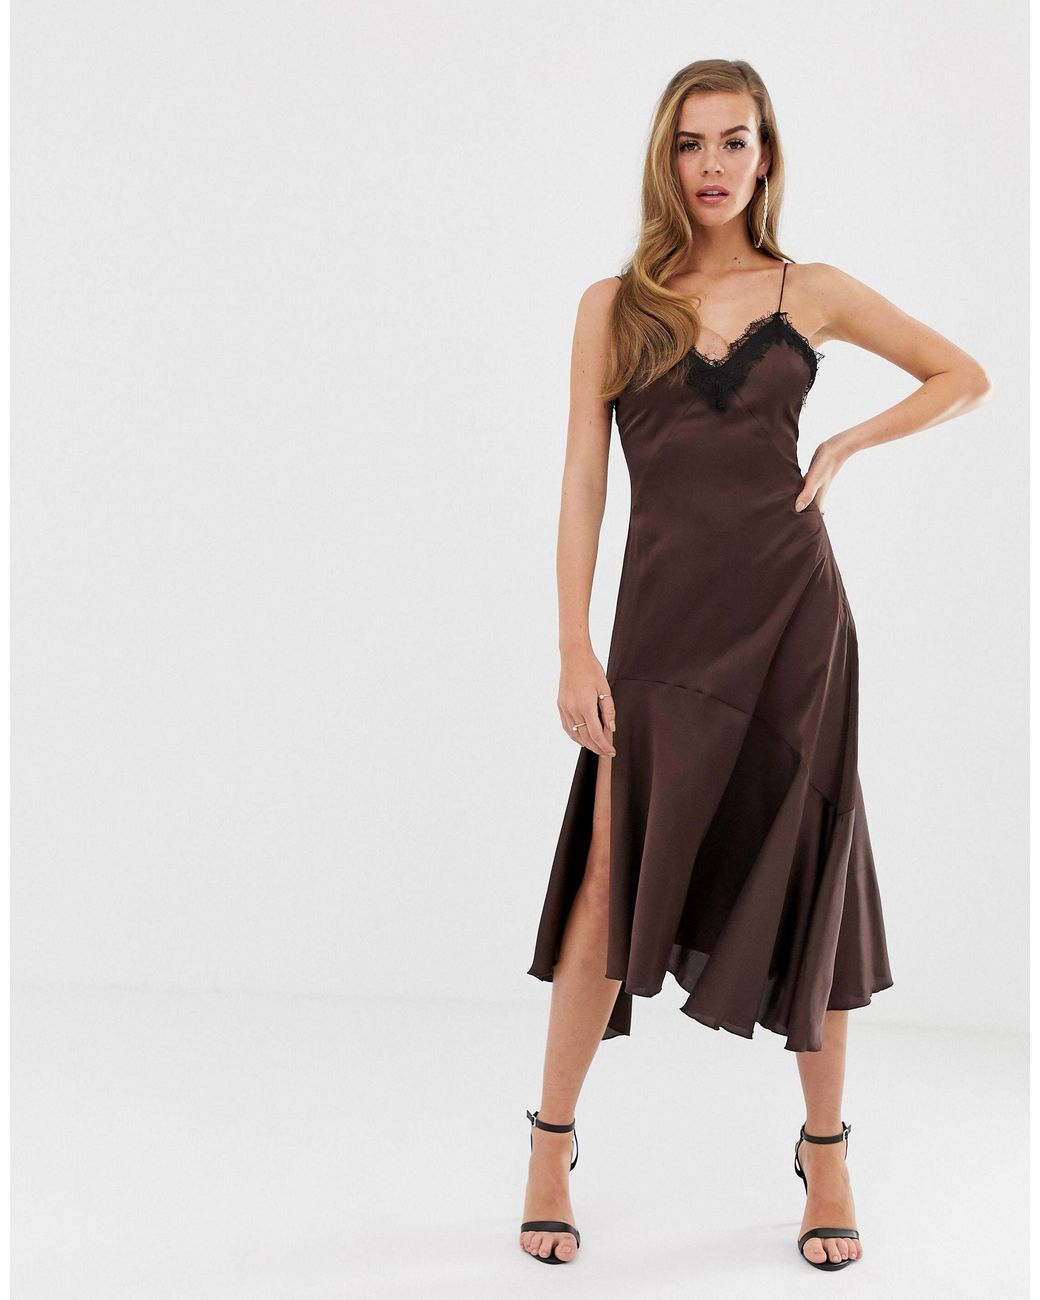 Chocolate Brown Satin Dress